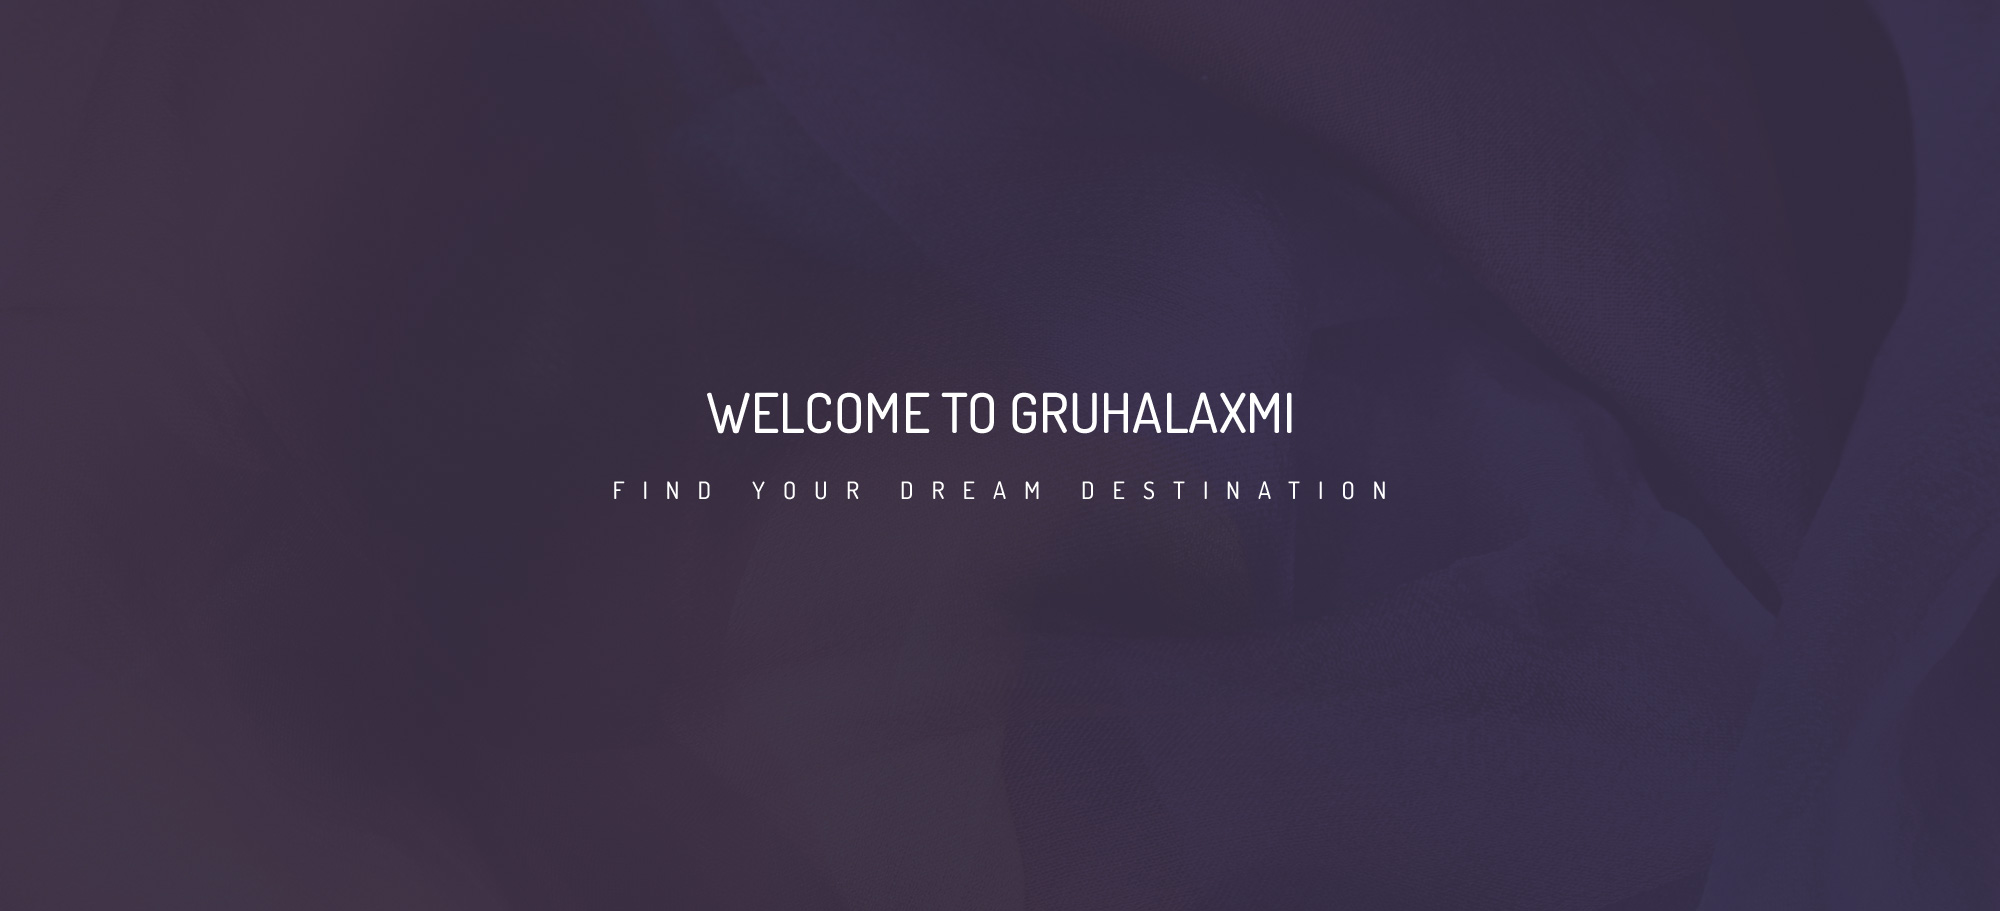 WELCOME TO GRUHALAXMI